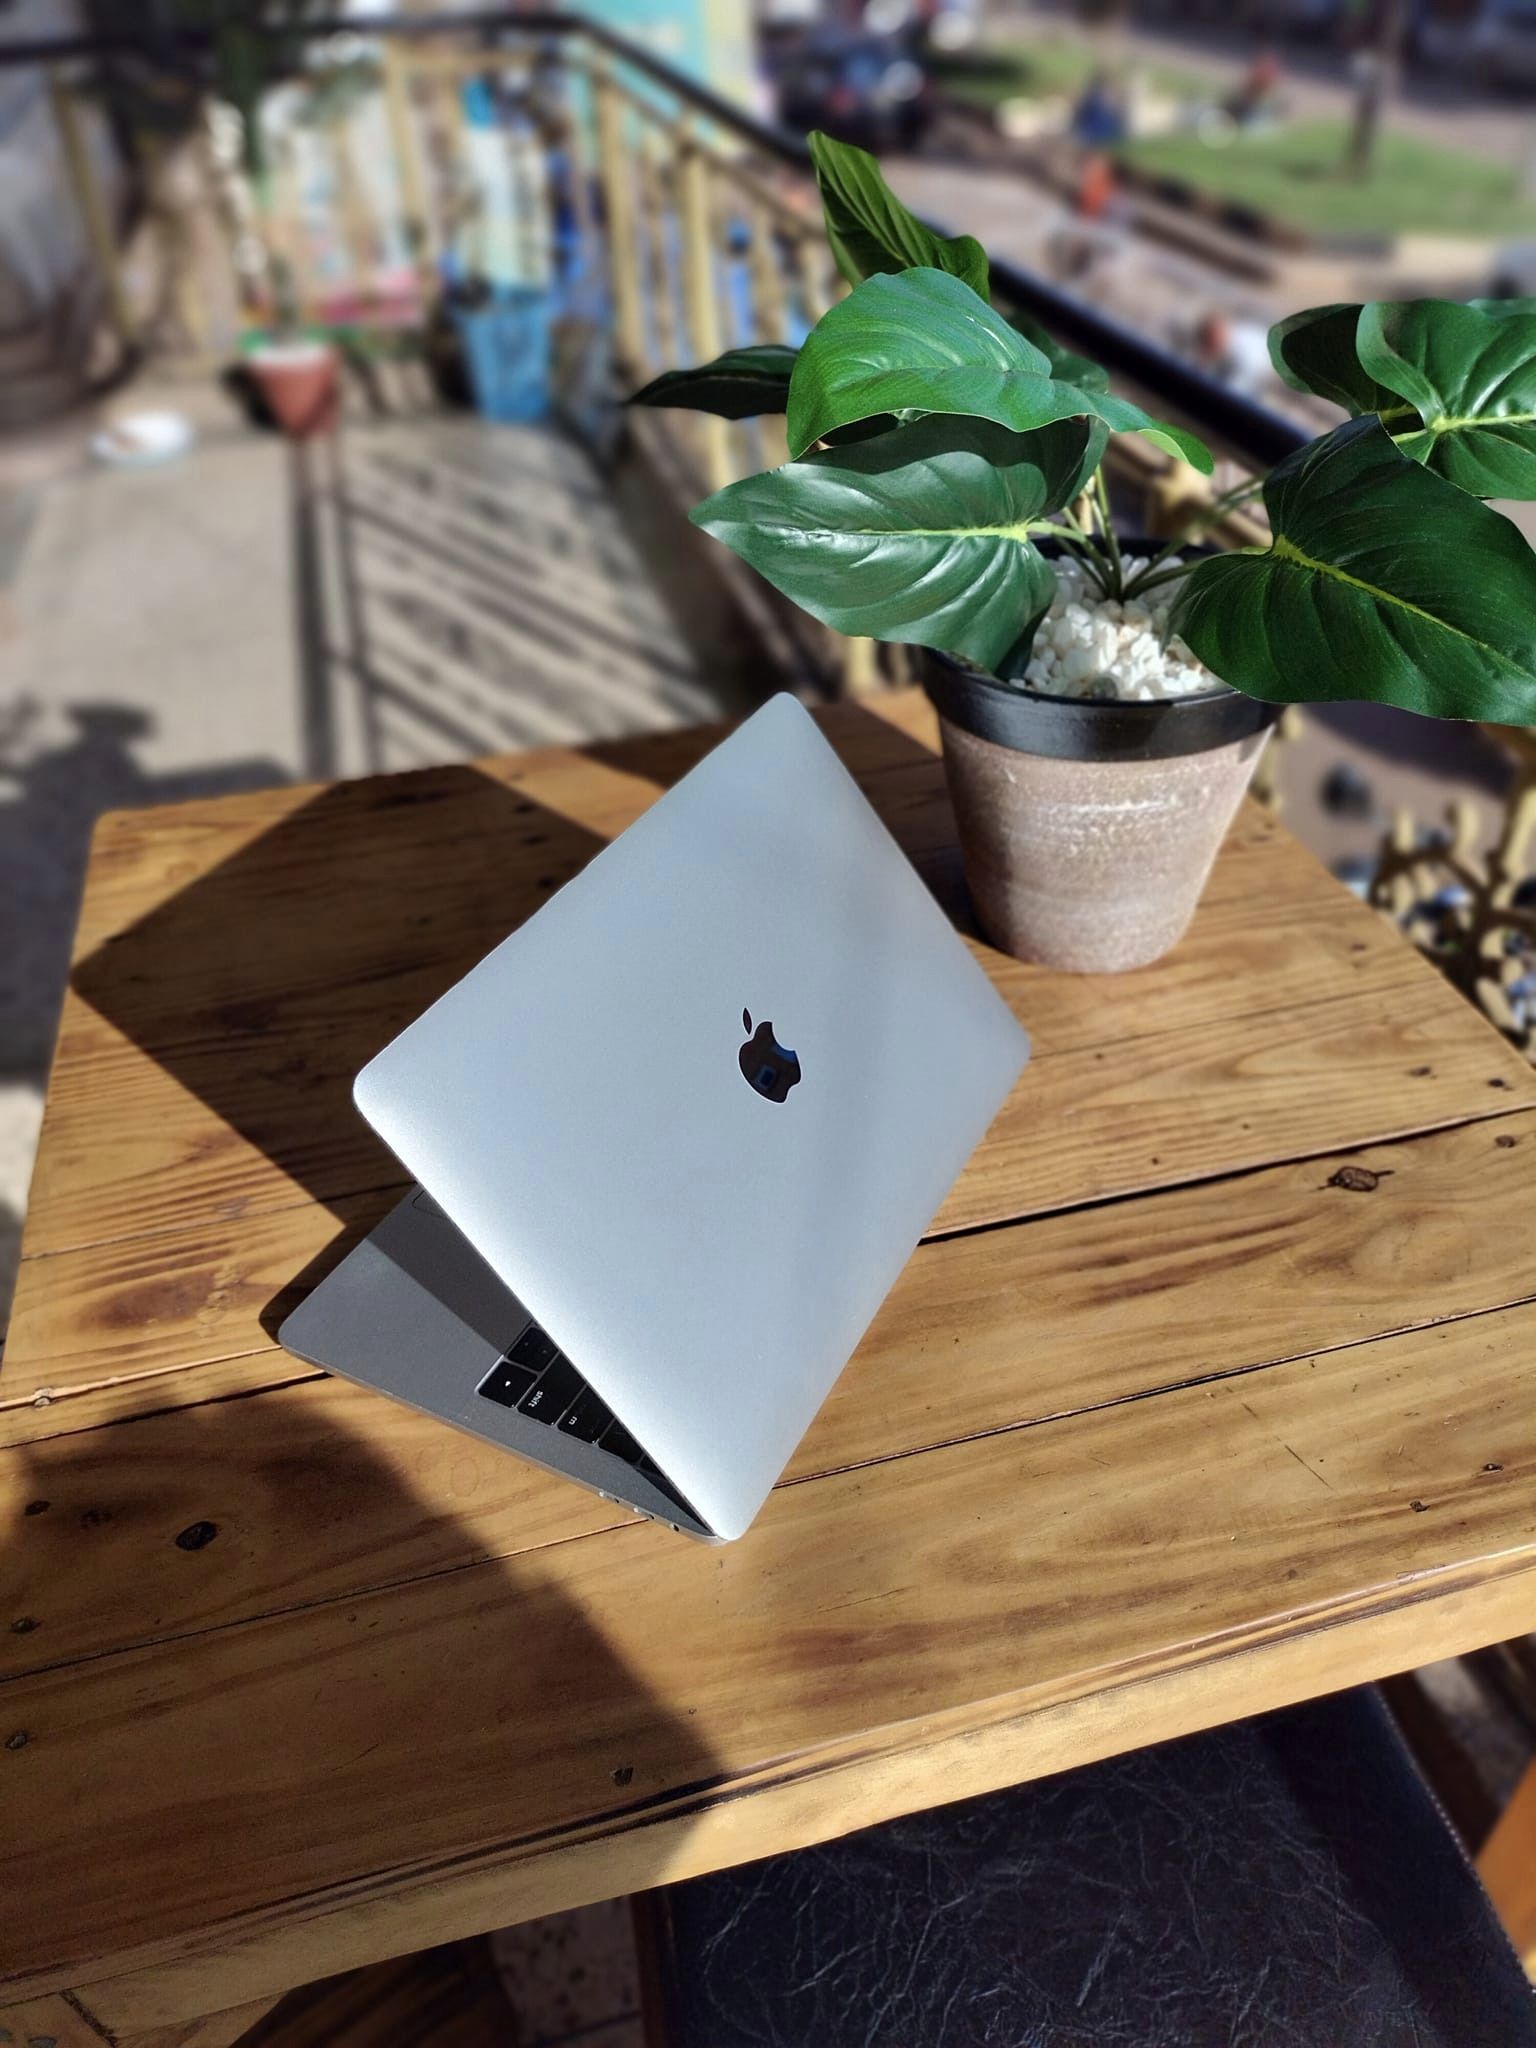 MacBook Pro corei5,2016, 16gb ram, 256gb